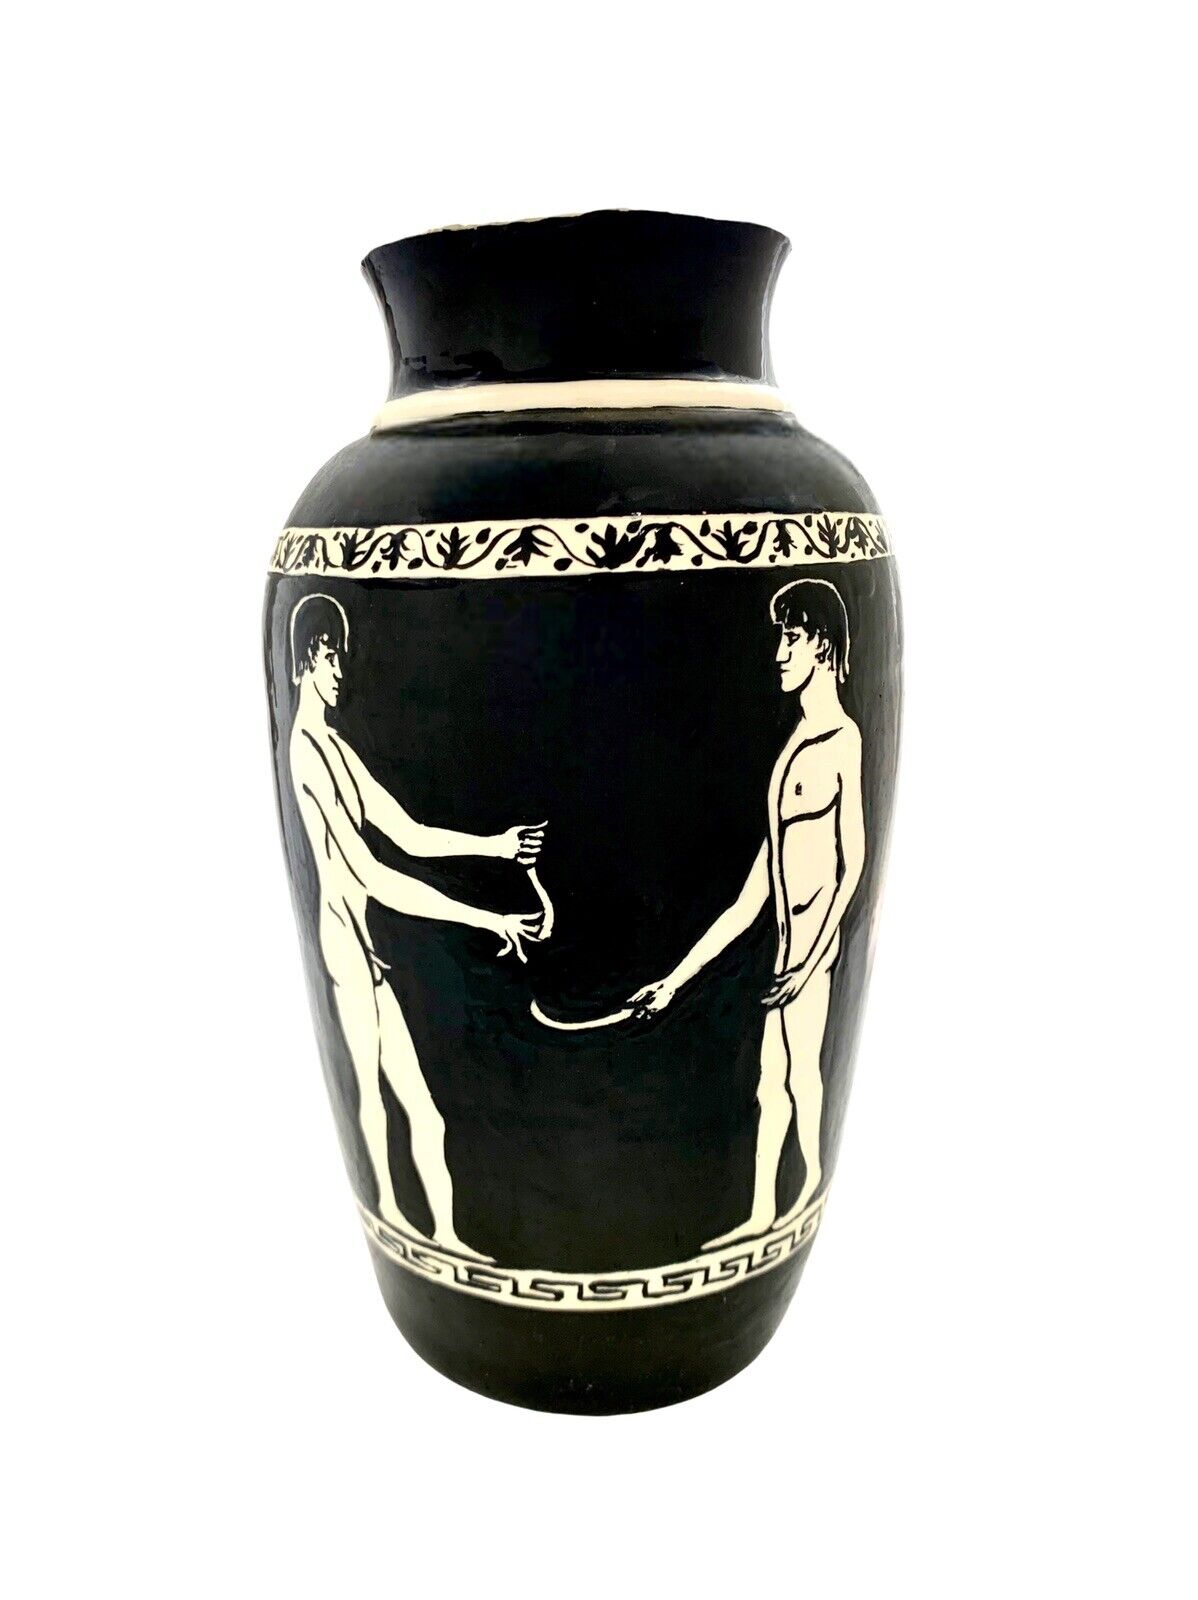 Vase with Greek Mythology Character Design Ceramic Vintage Decor